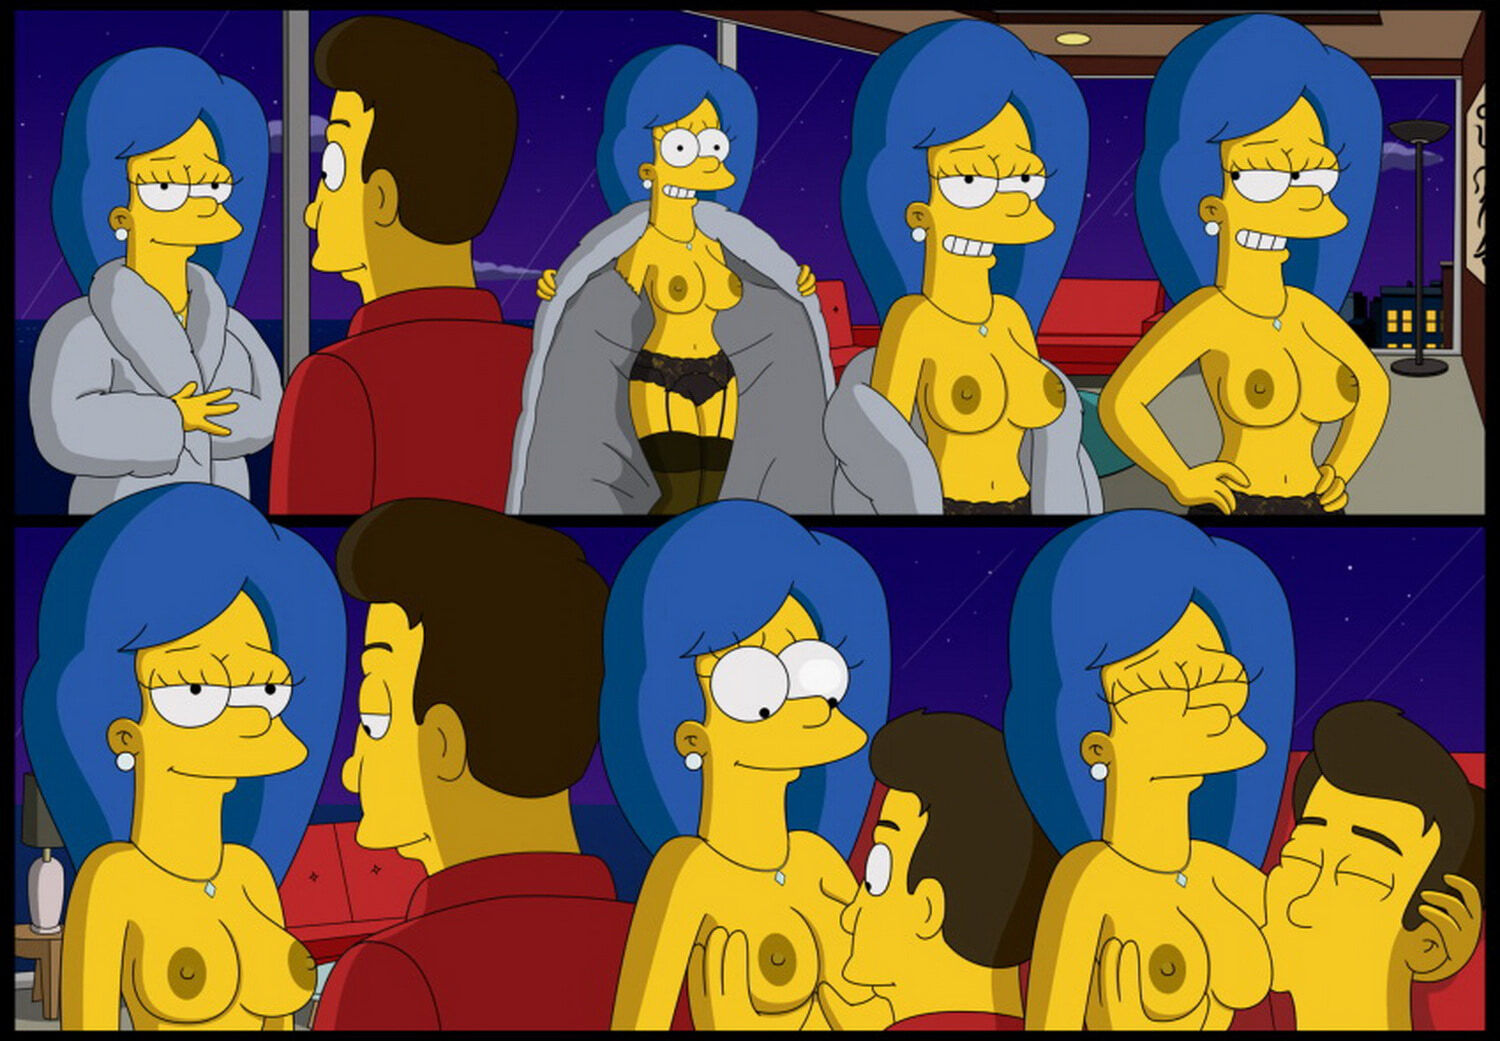 Marge Simpson Cuckold